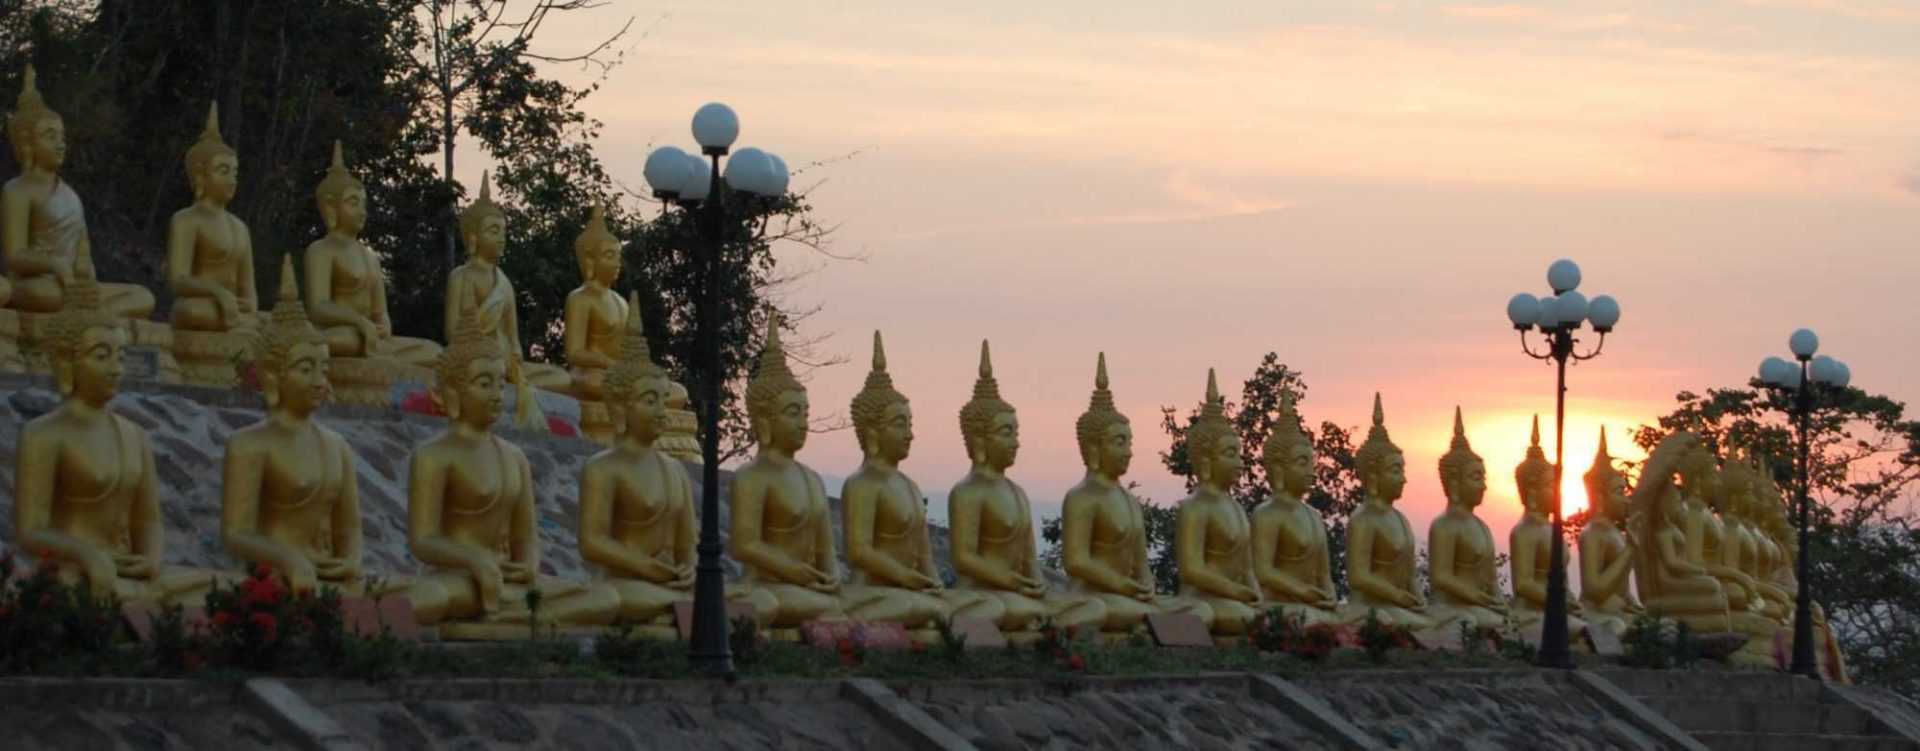 Buddha statues produce miracles